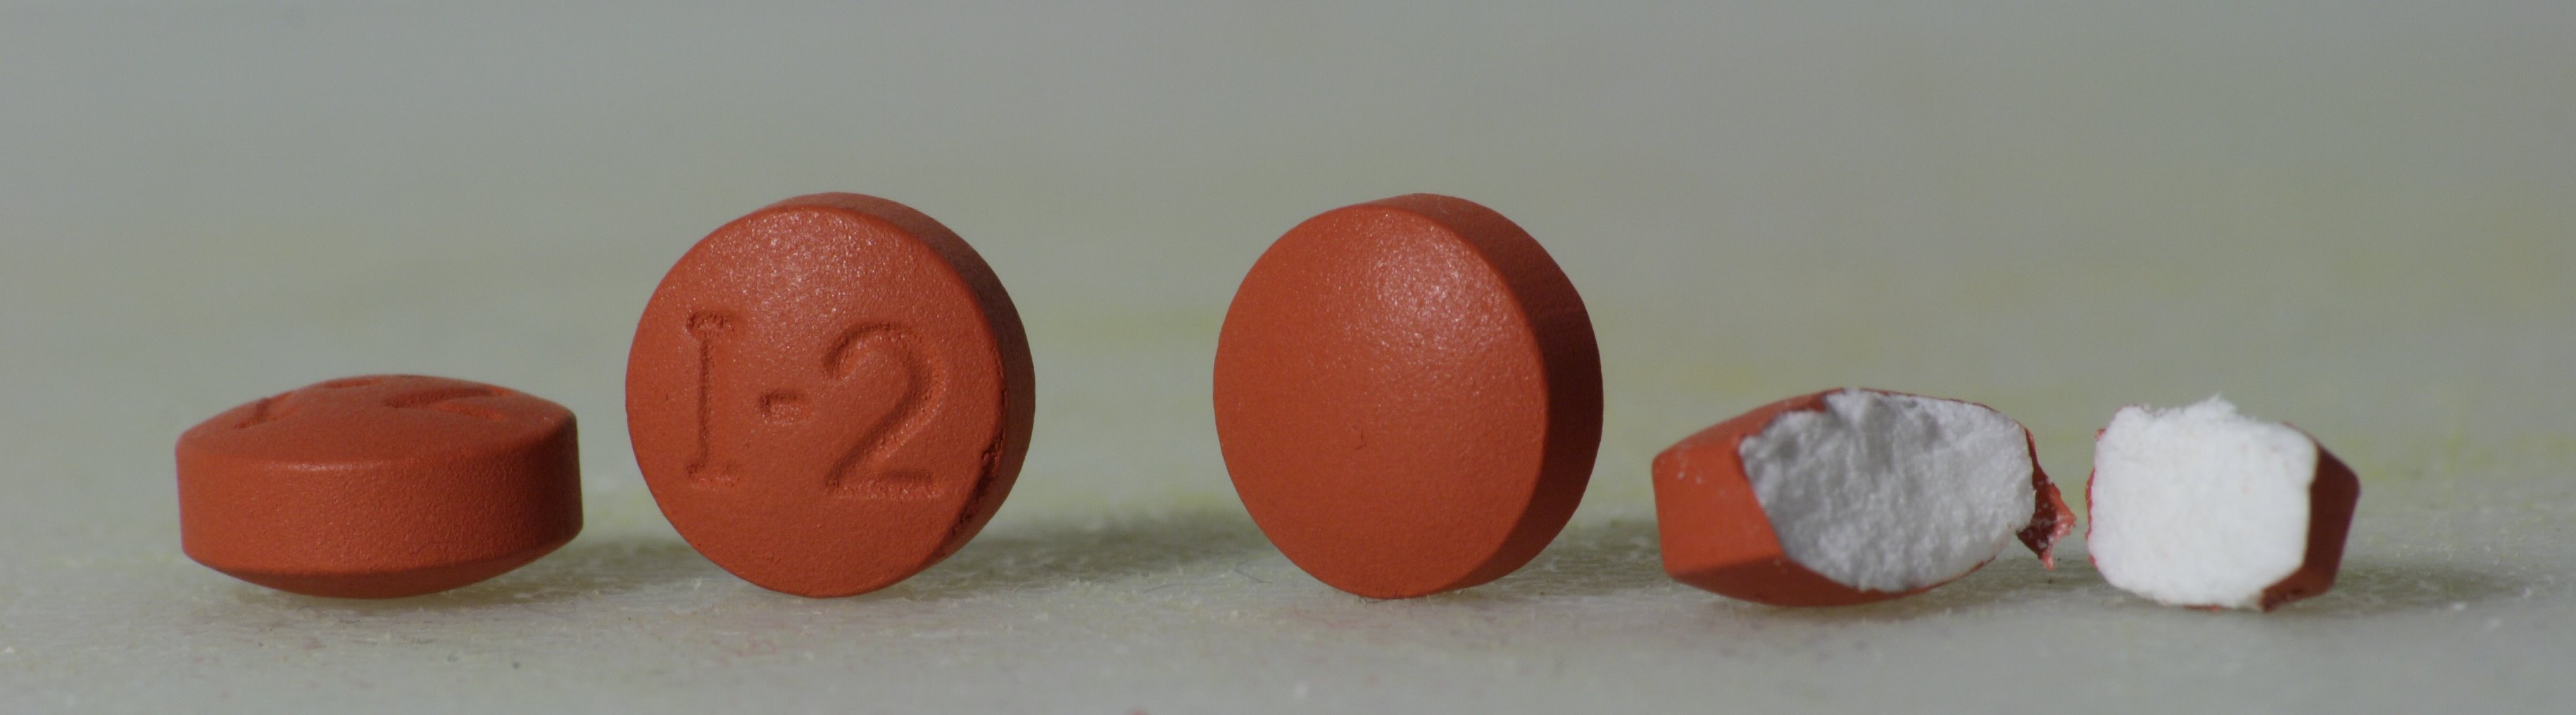 200mg ibuprofen tablets